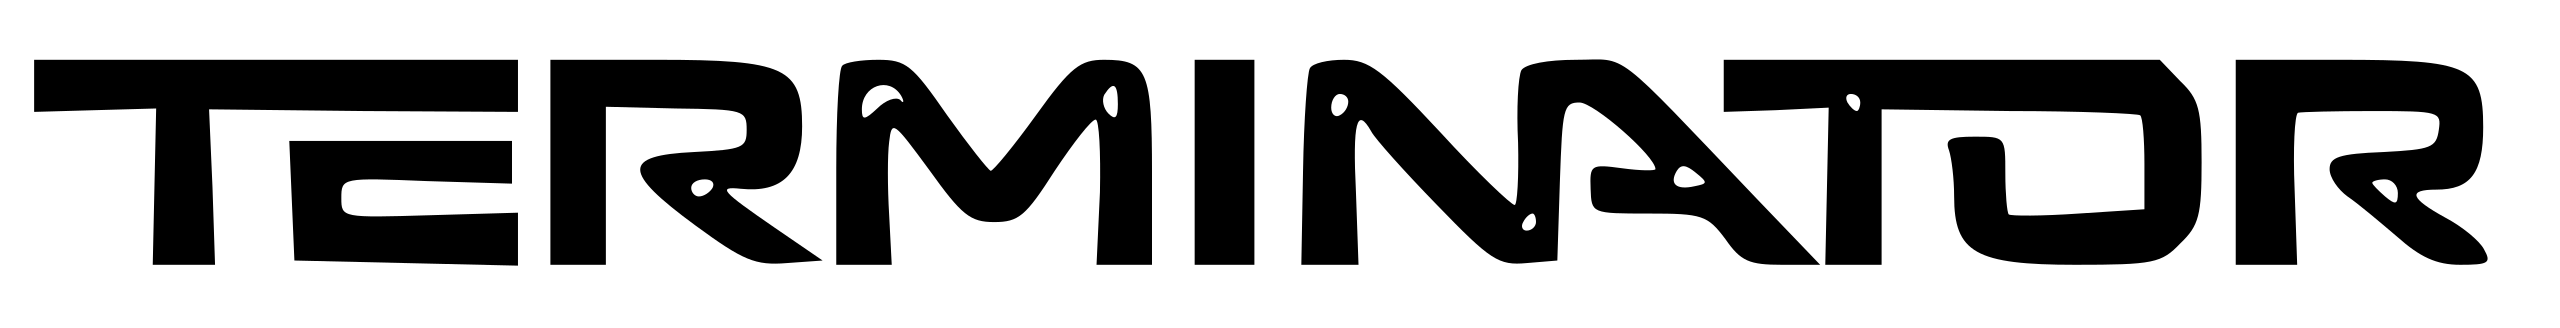 Terminator Logo